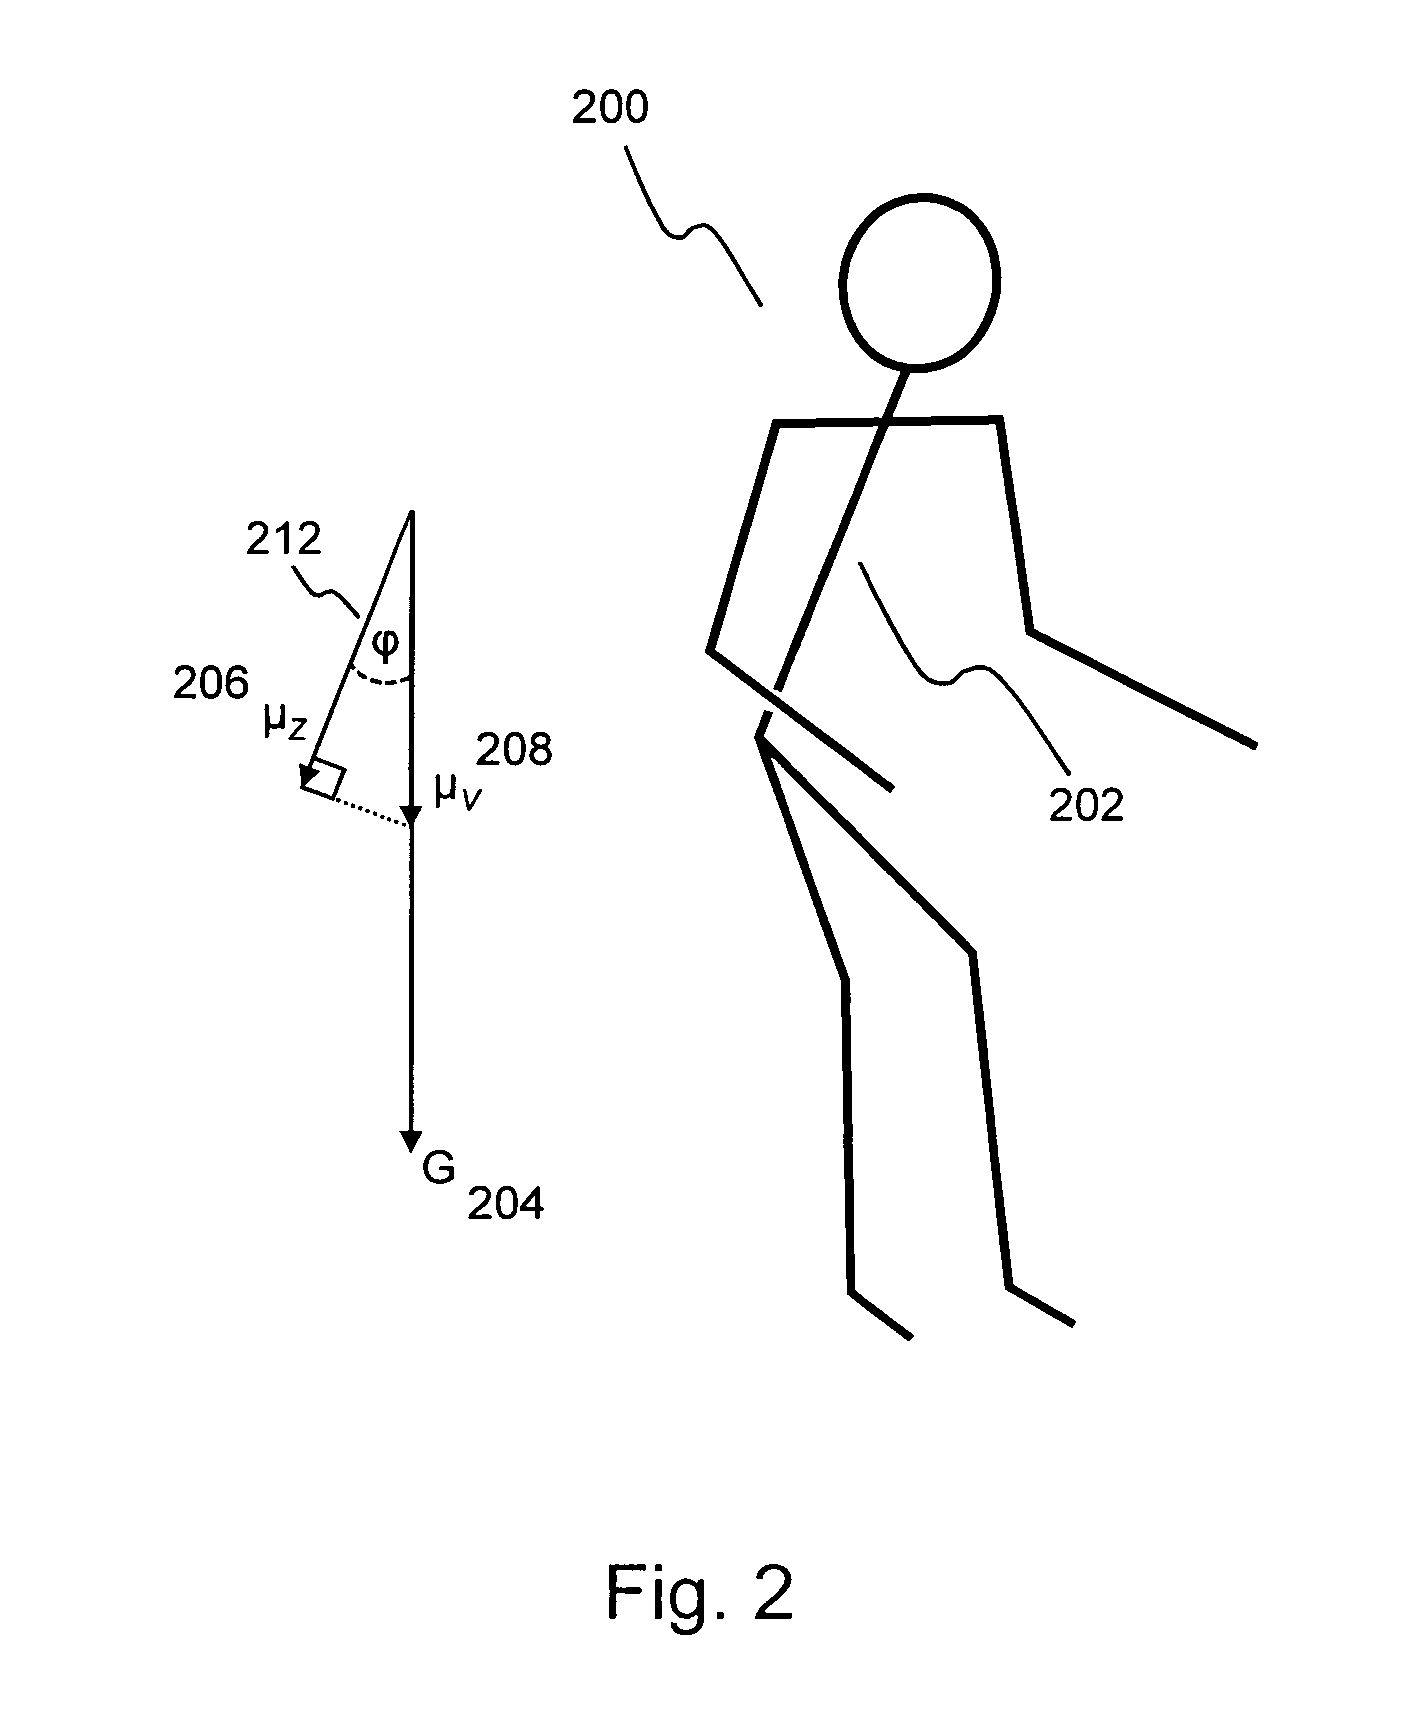 Newtonian physical activity monitor